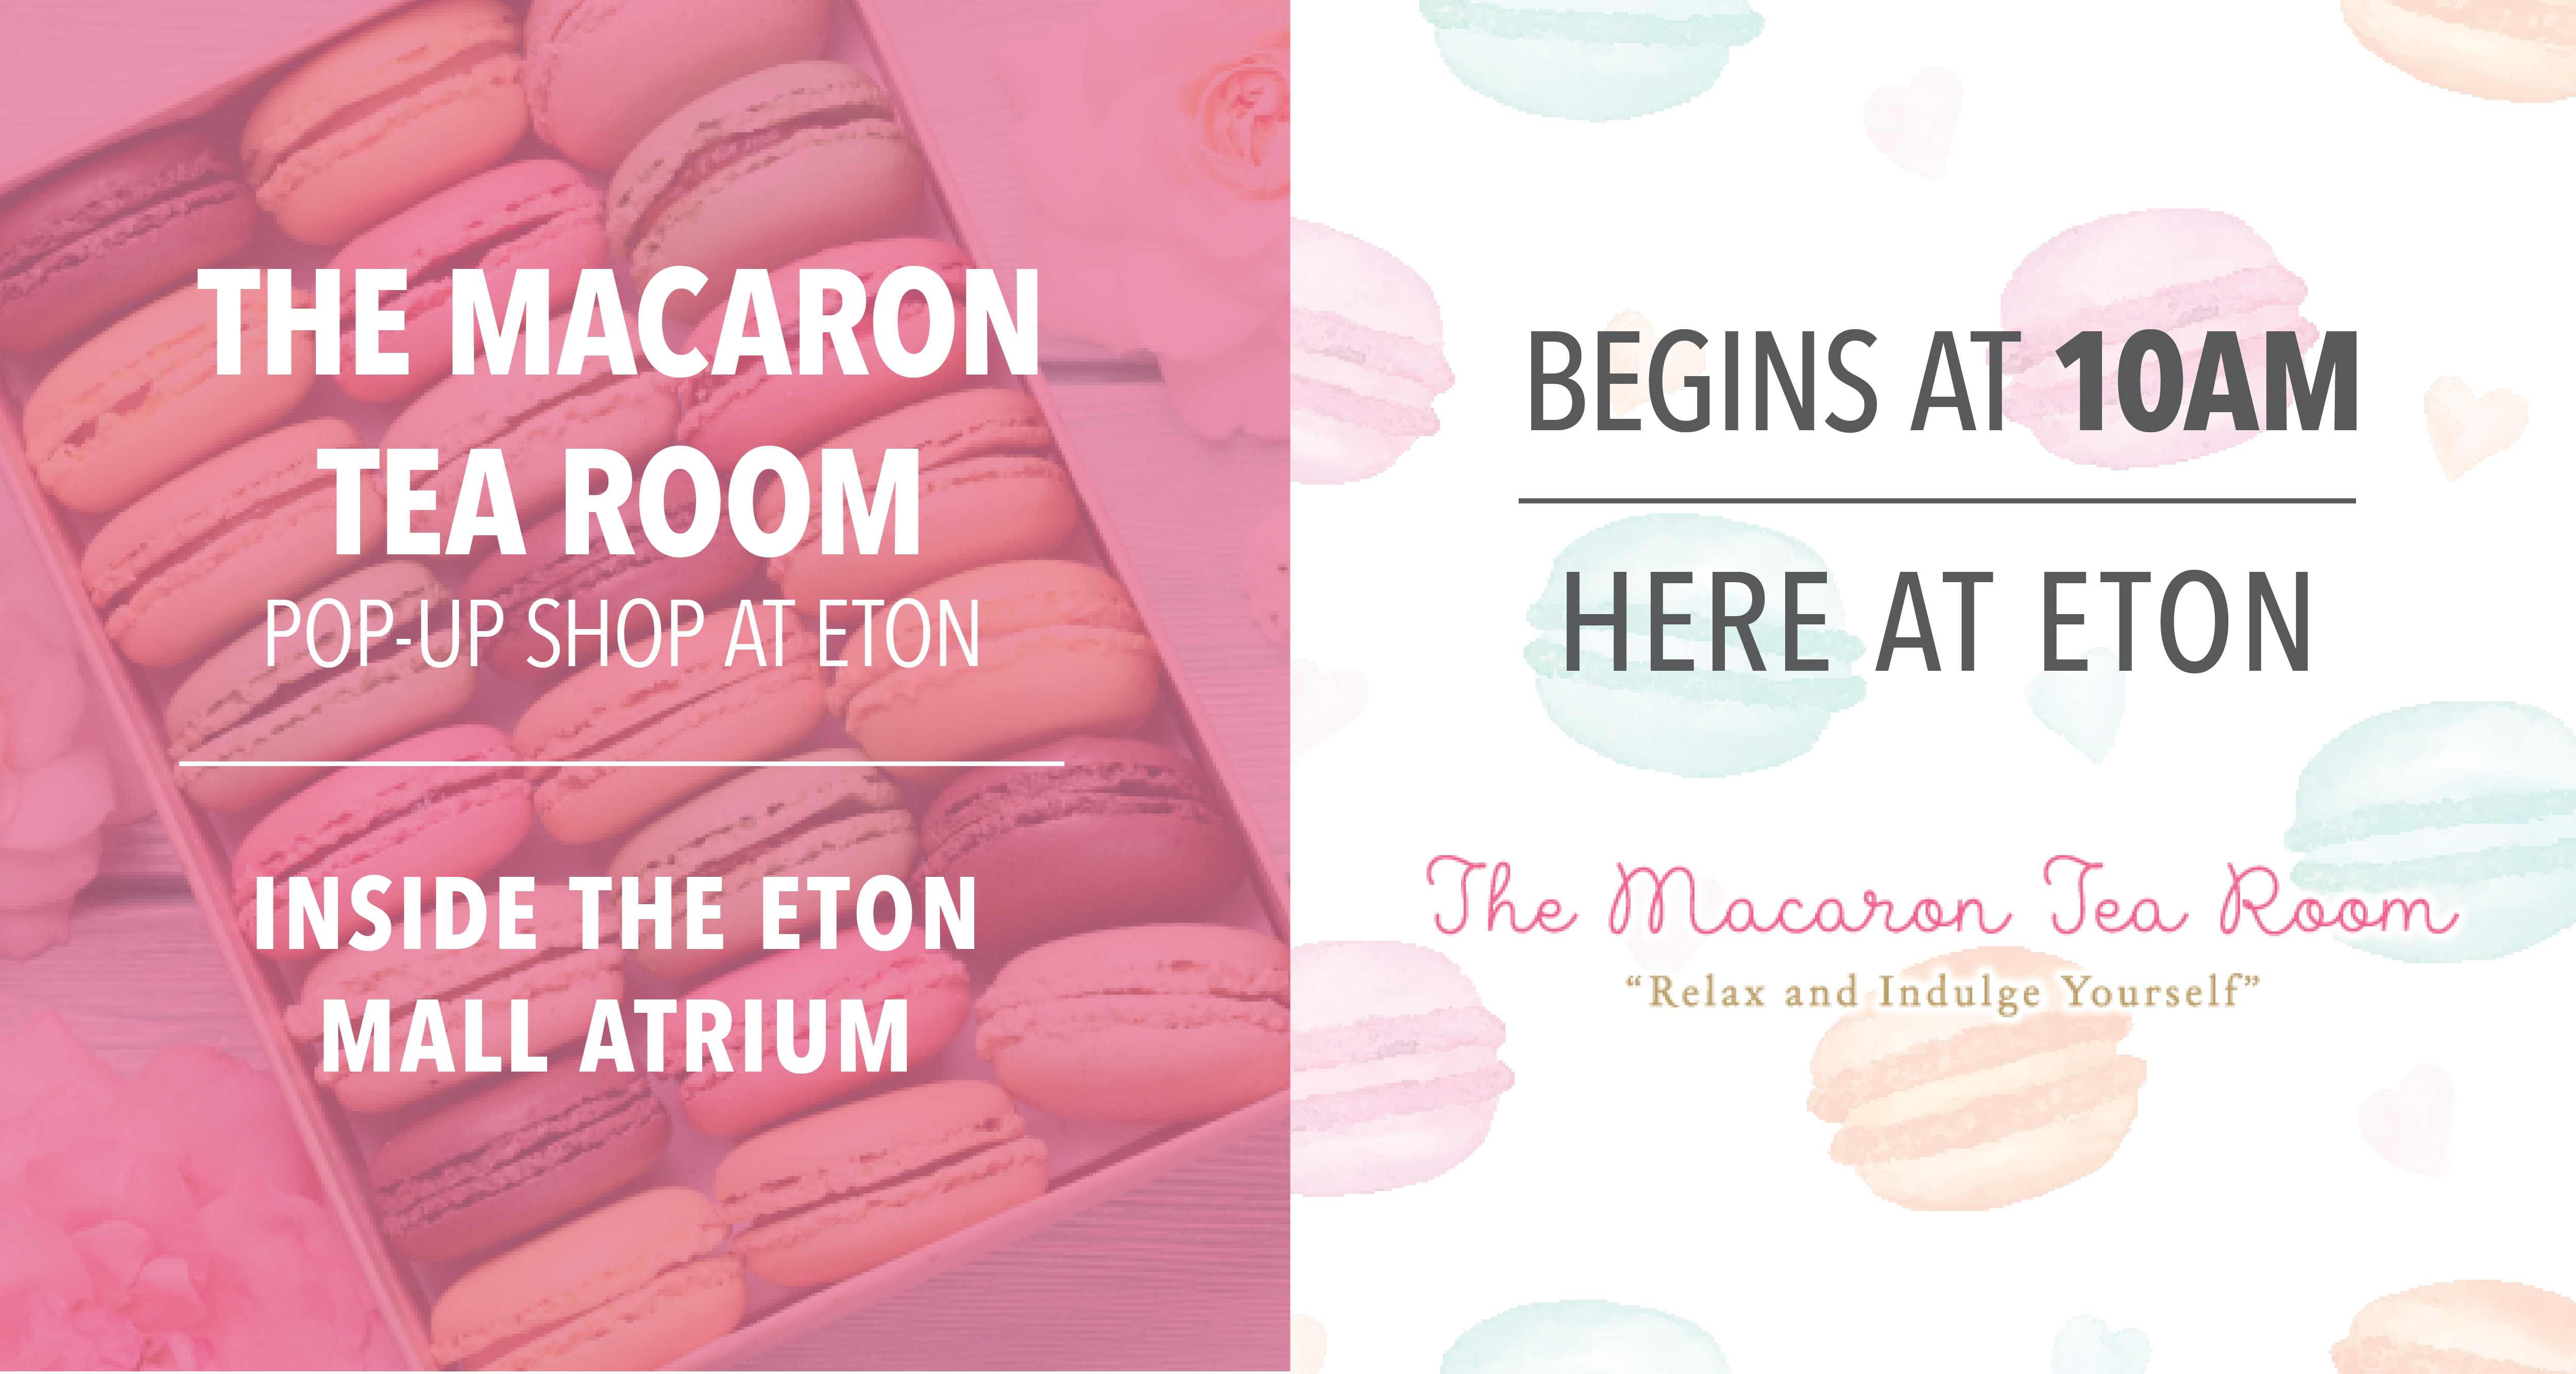 The Macaron Tea Room Pop-Up